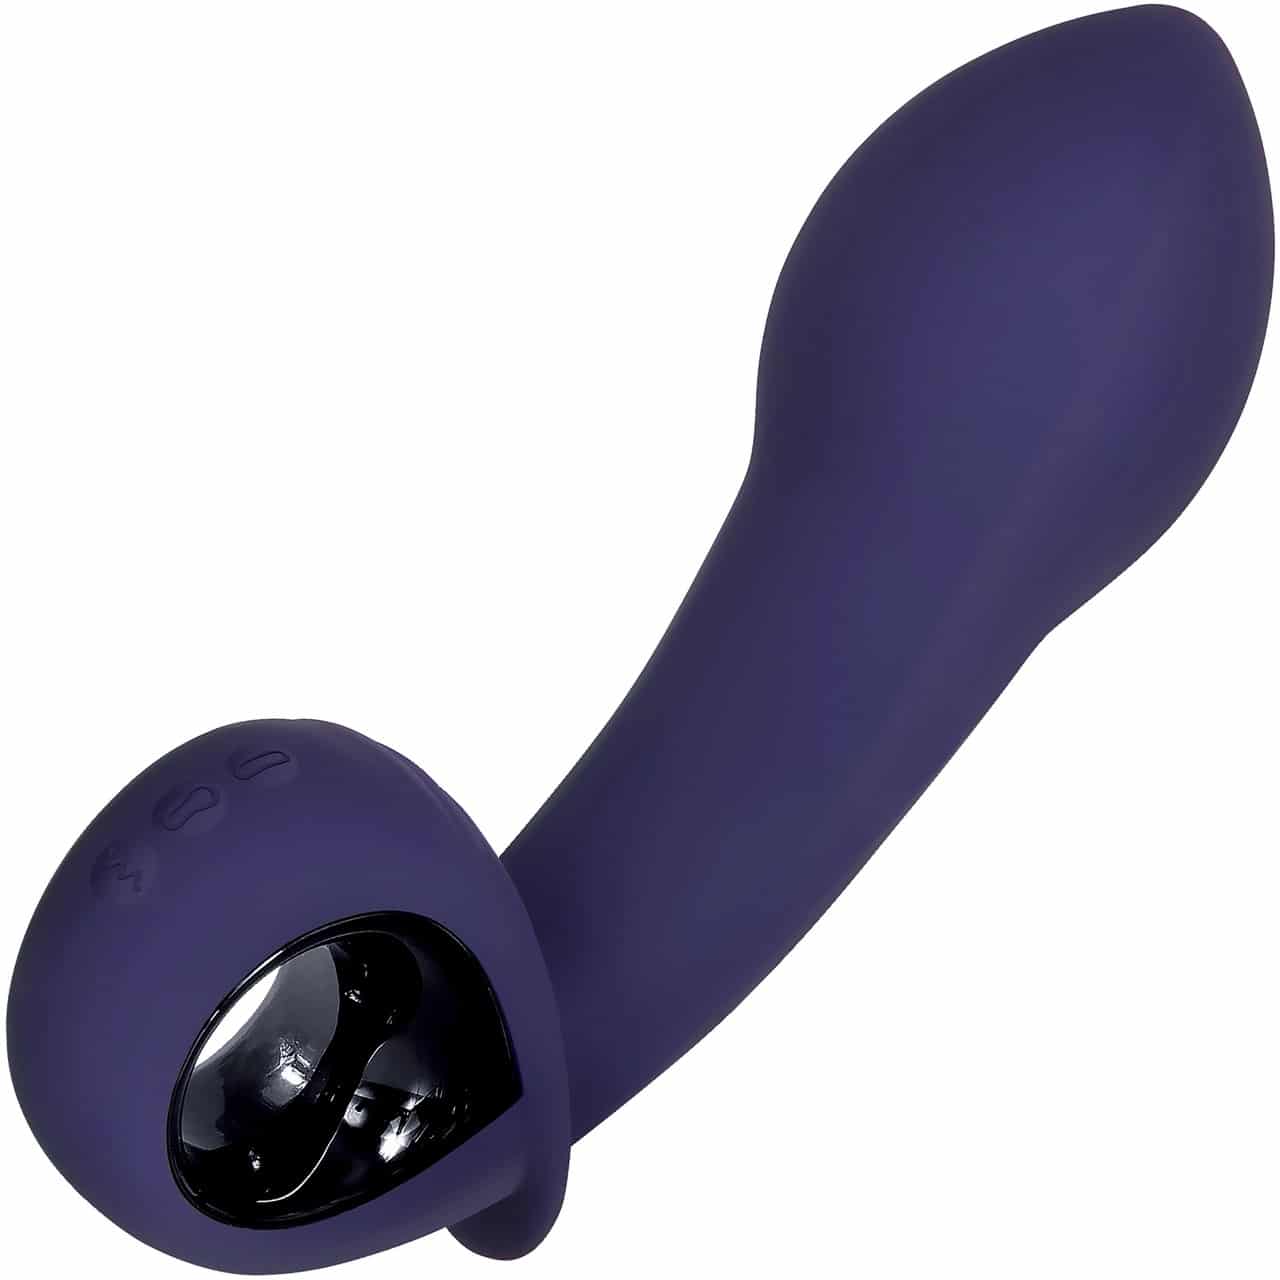 Inflatable Silicone G-Spot Vibrator By Evolved Novelties. Slide 6